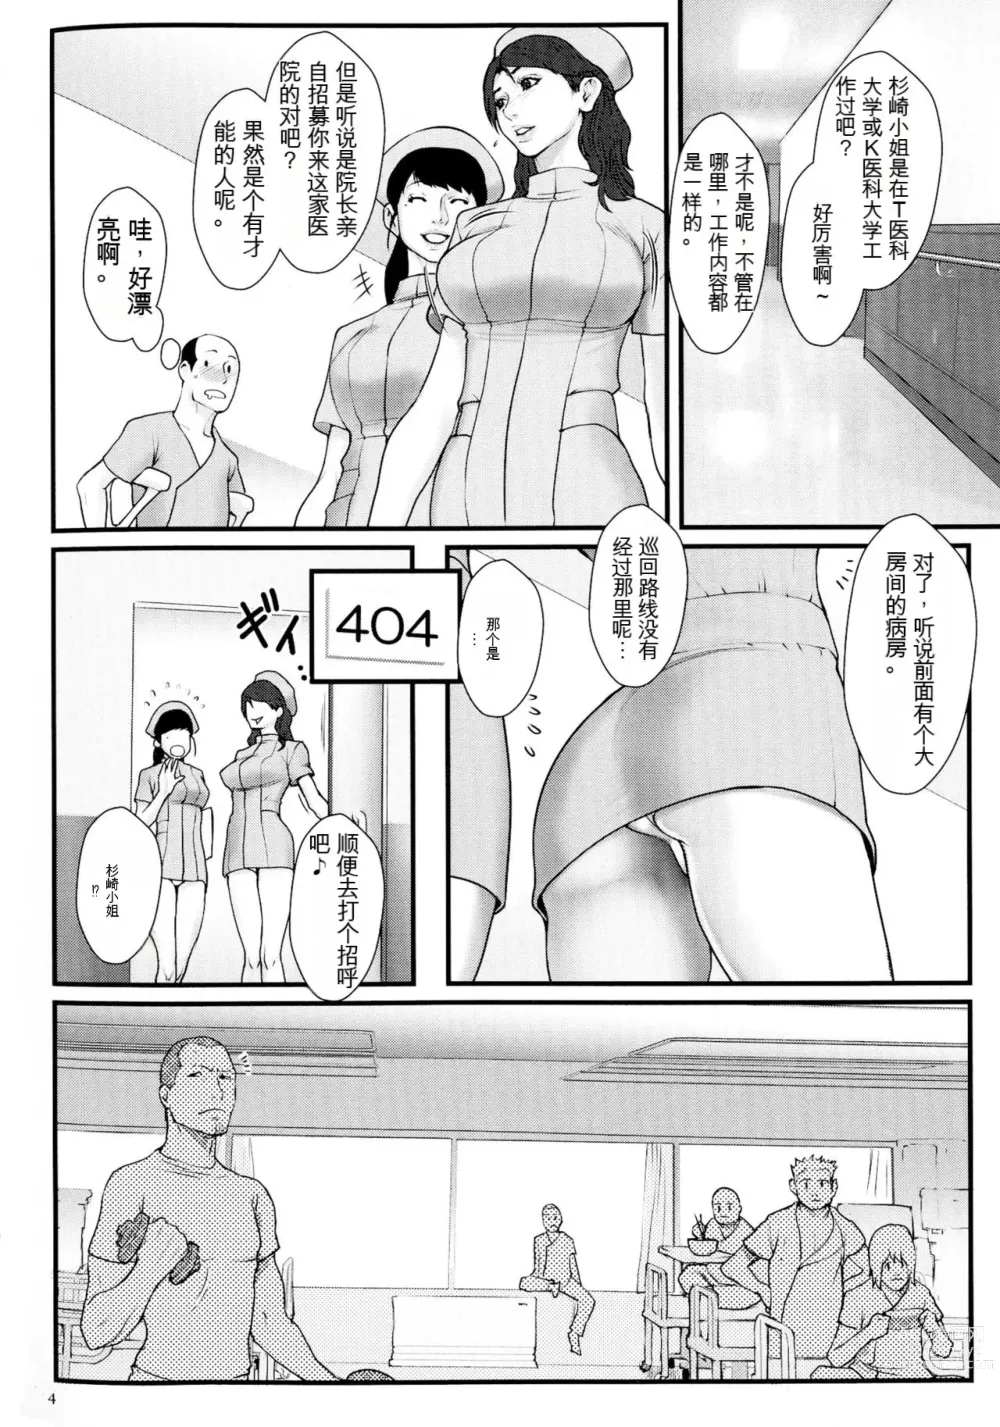 Page 6 of manga Chakushou! Haramase Shima